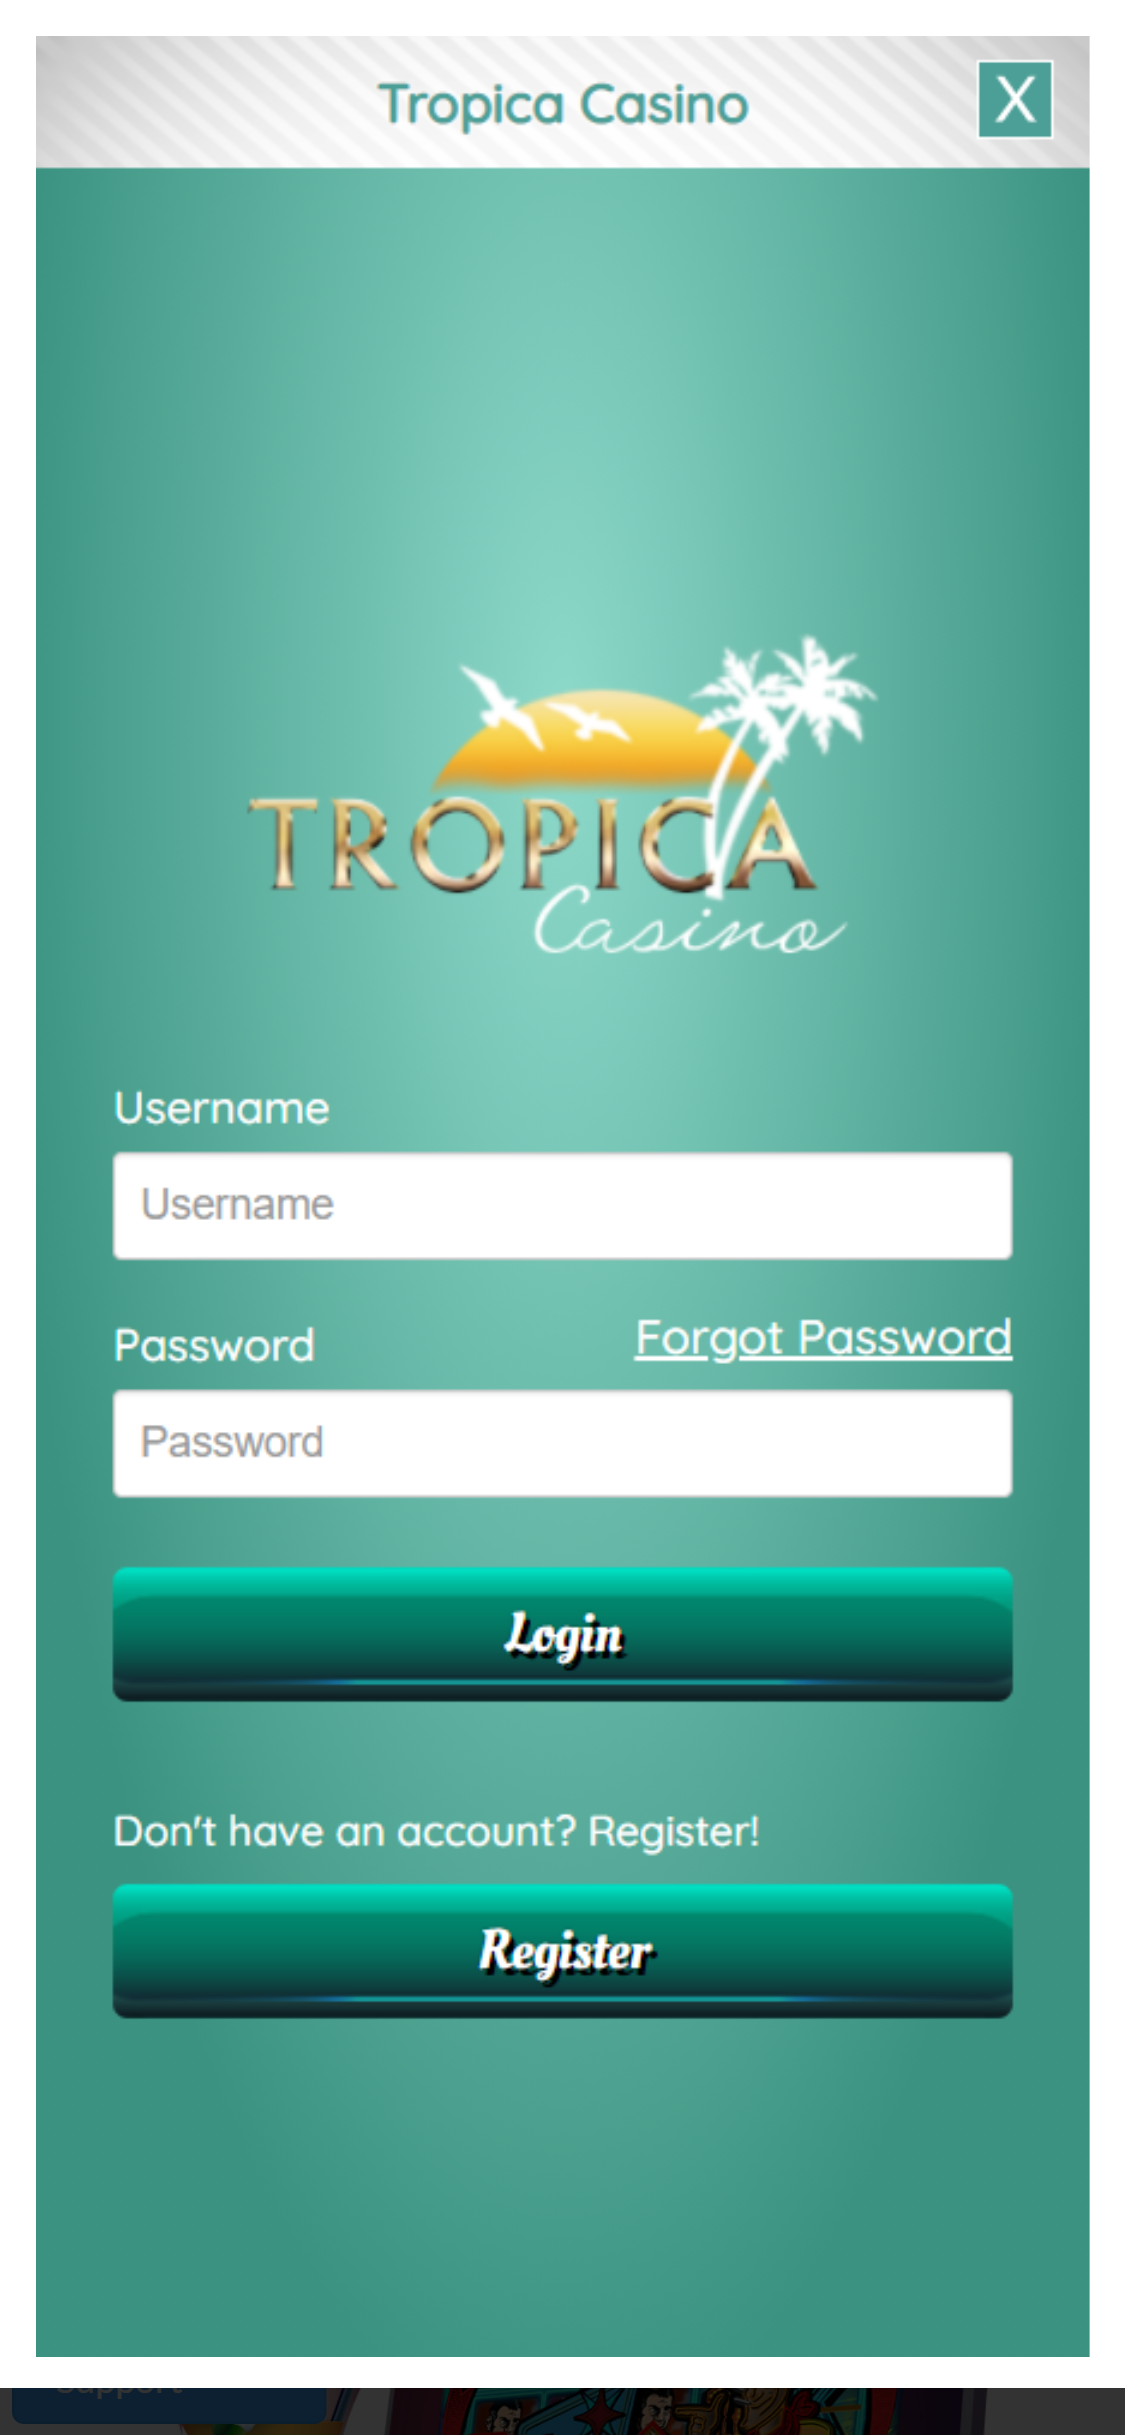 Tropica Casino Mobile Login Review